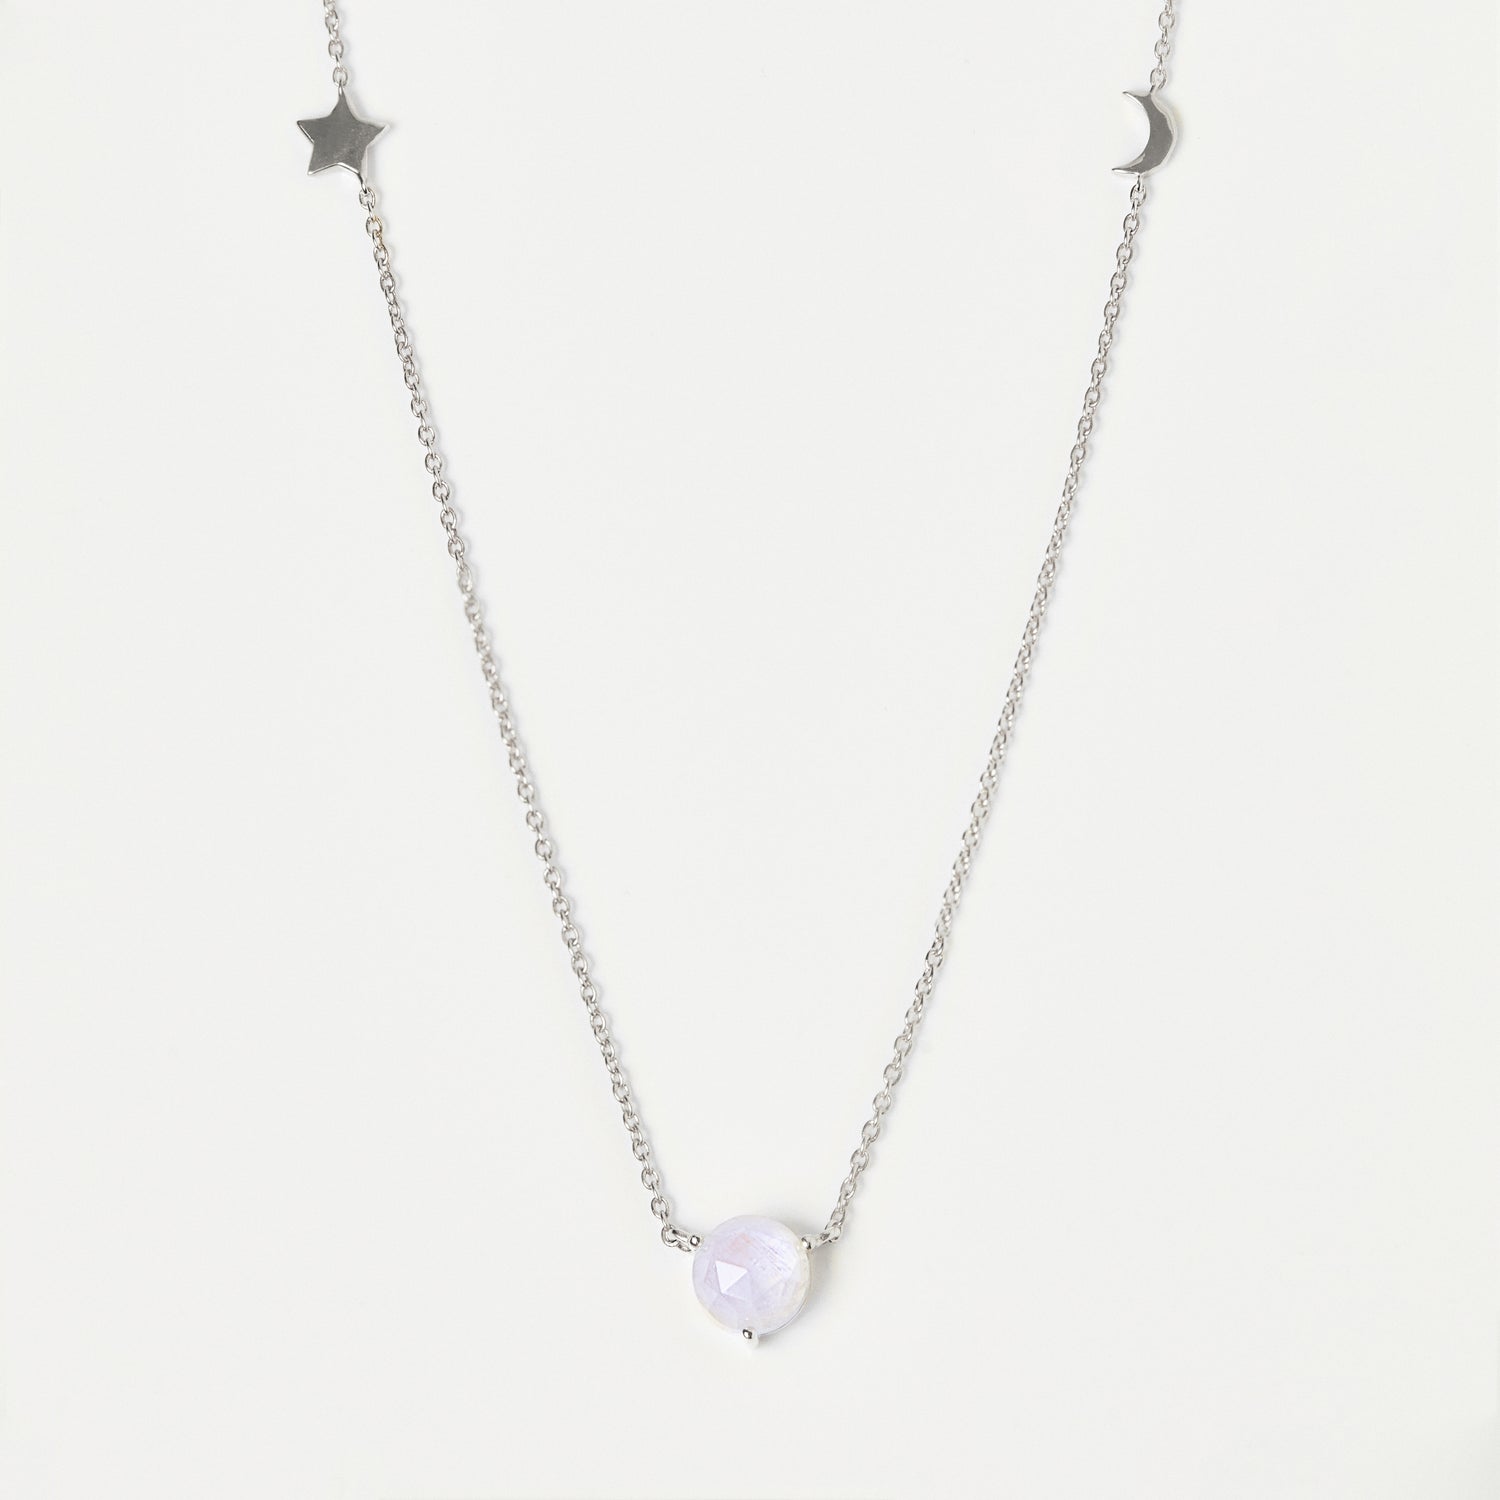 Dreamcatcher Necklace in Sterling Silver - Necklace - Carrie Elizabeth